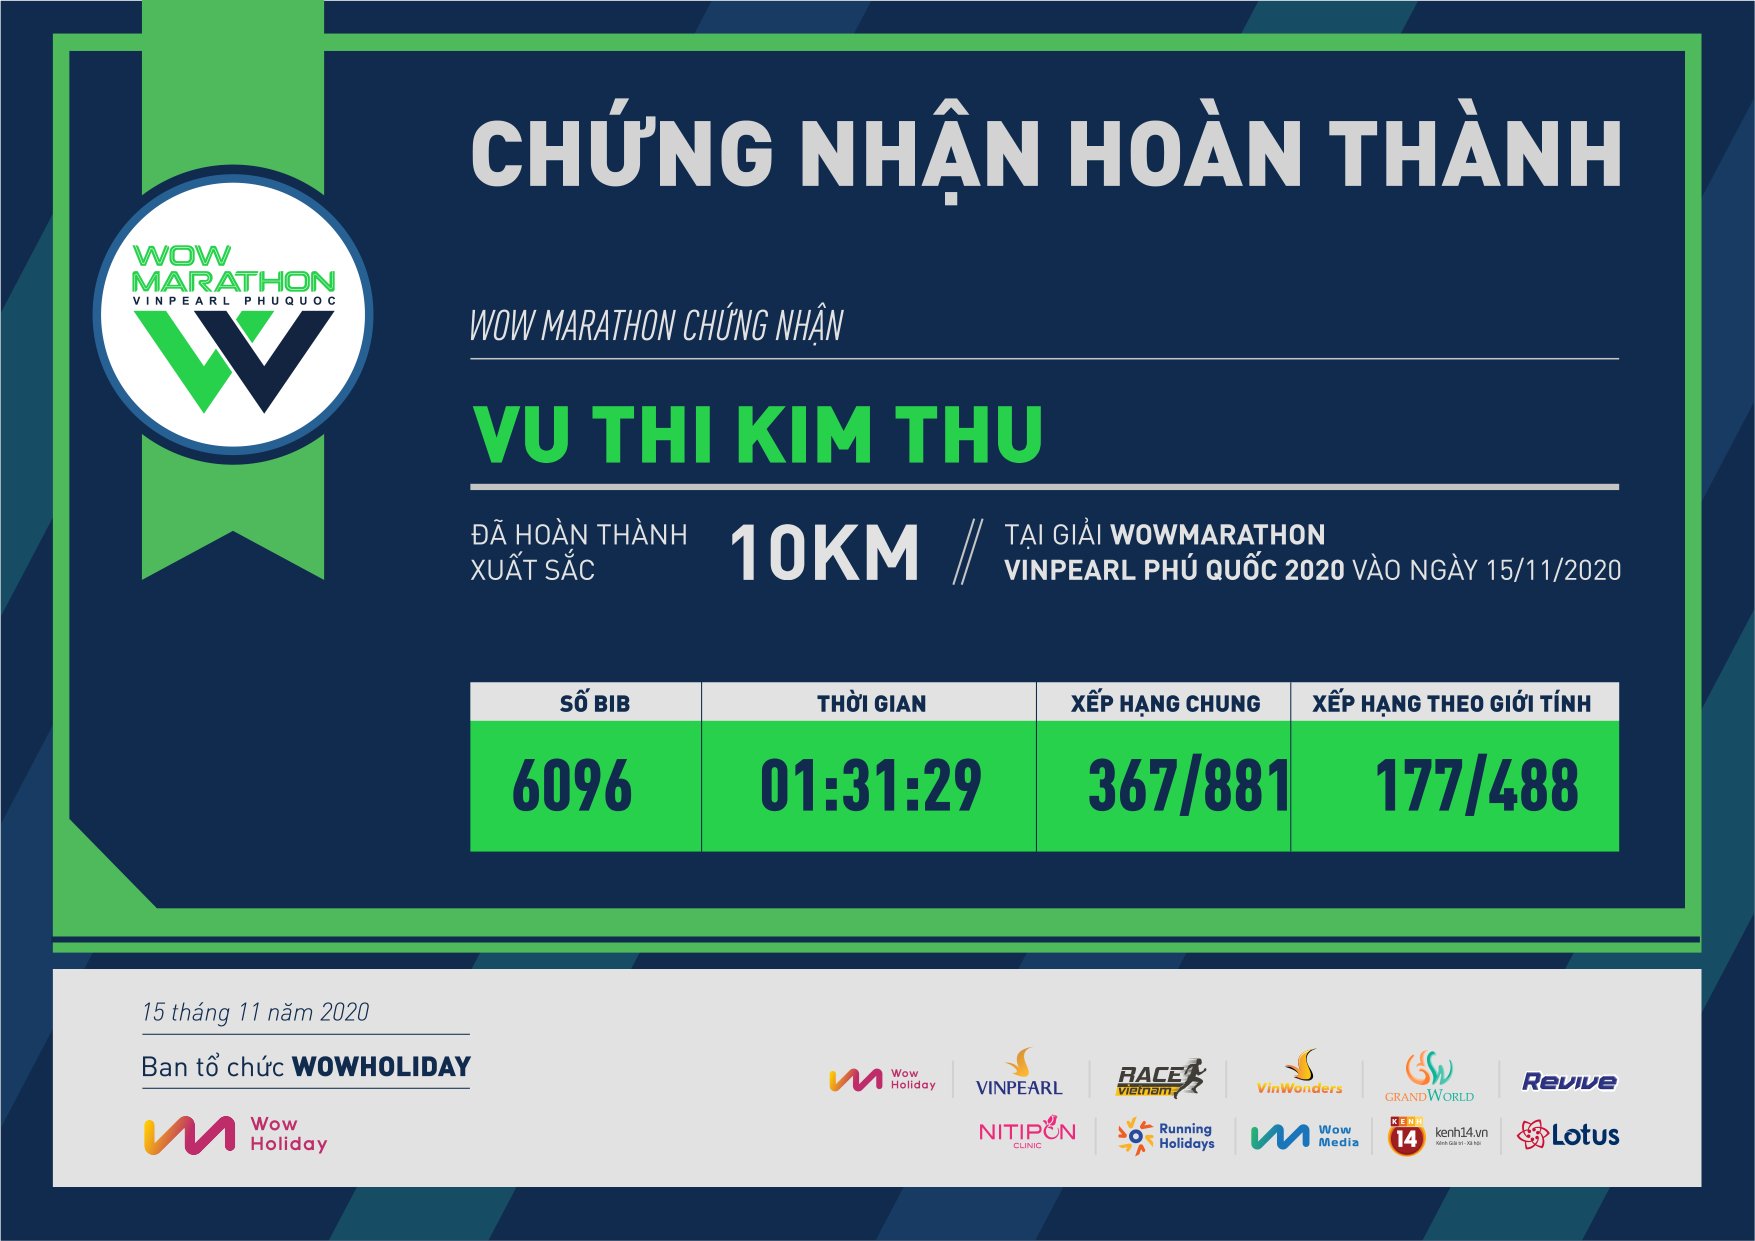 6096 - Vu Thi Kim Thu